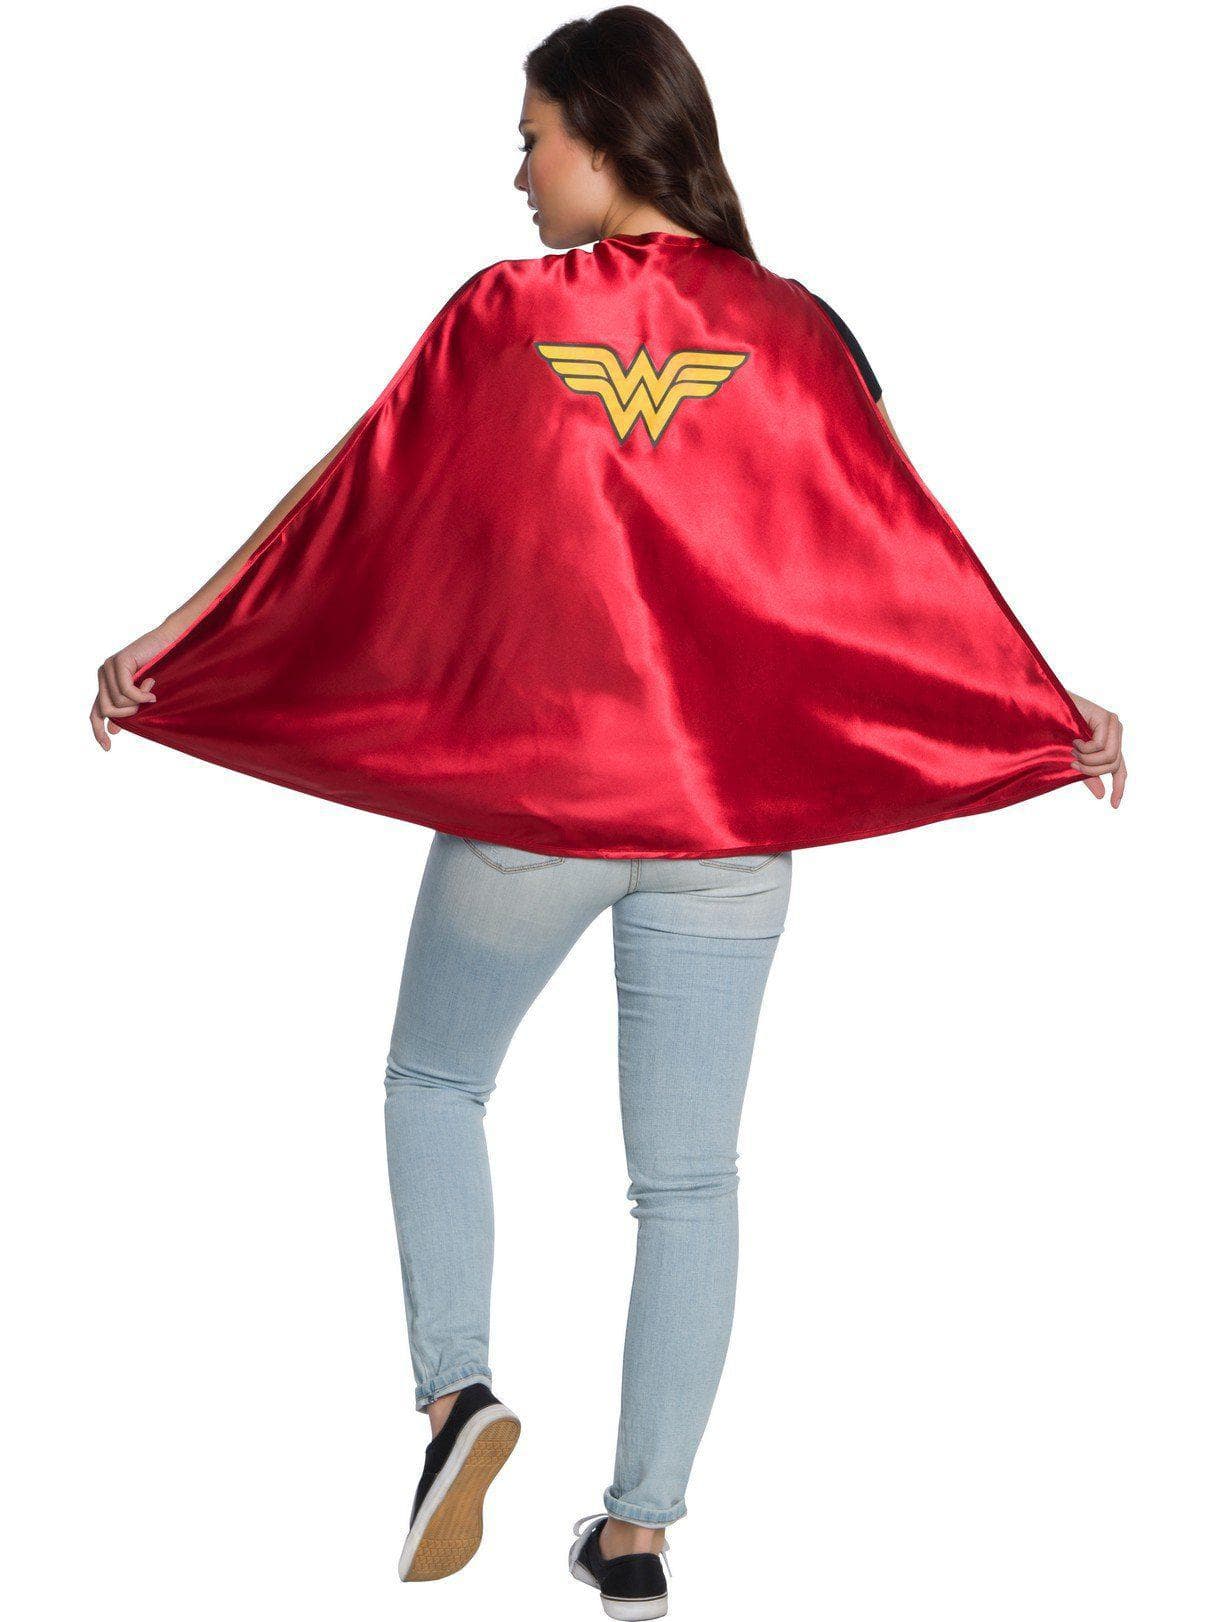 Women's Classic Wonder Woman Cape - Pride Edition - costumes.com